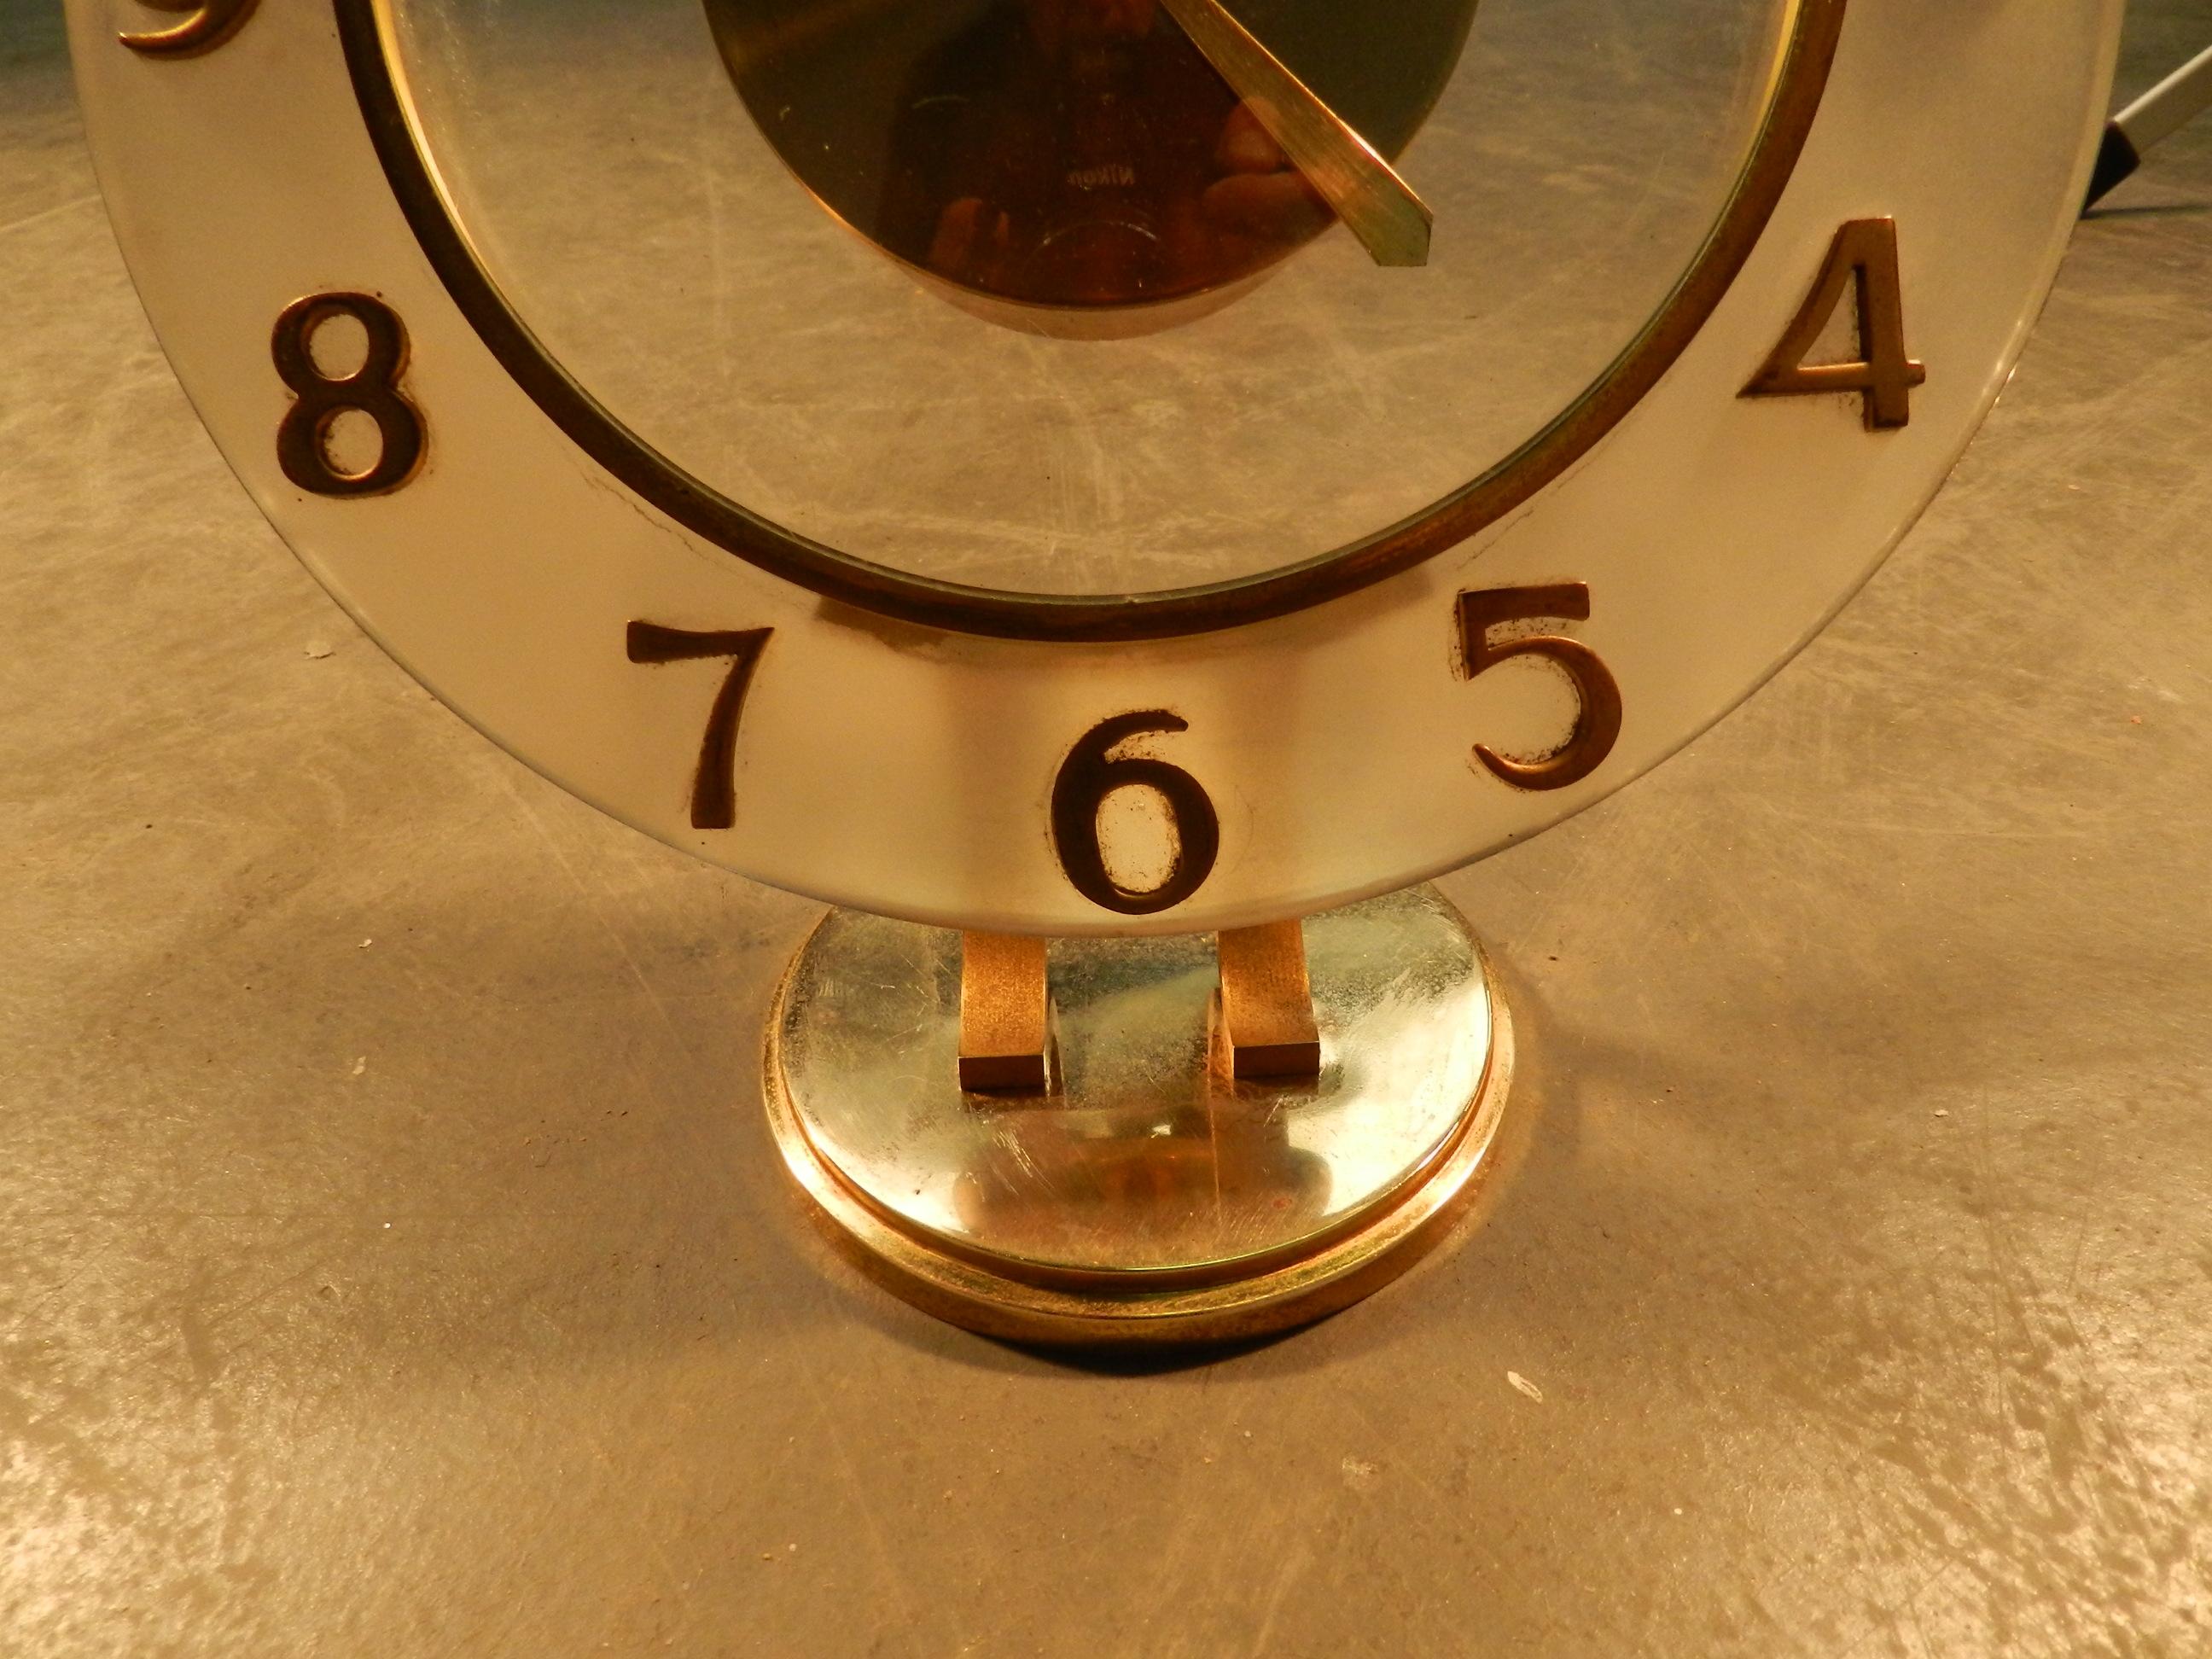 art deco table clock, Bayard brand, works. For Sale 12